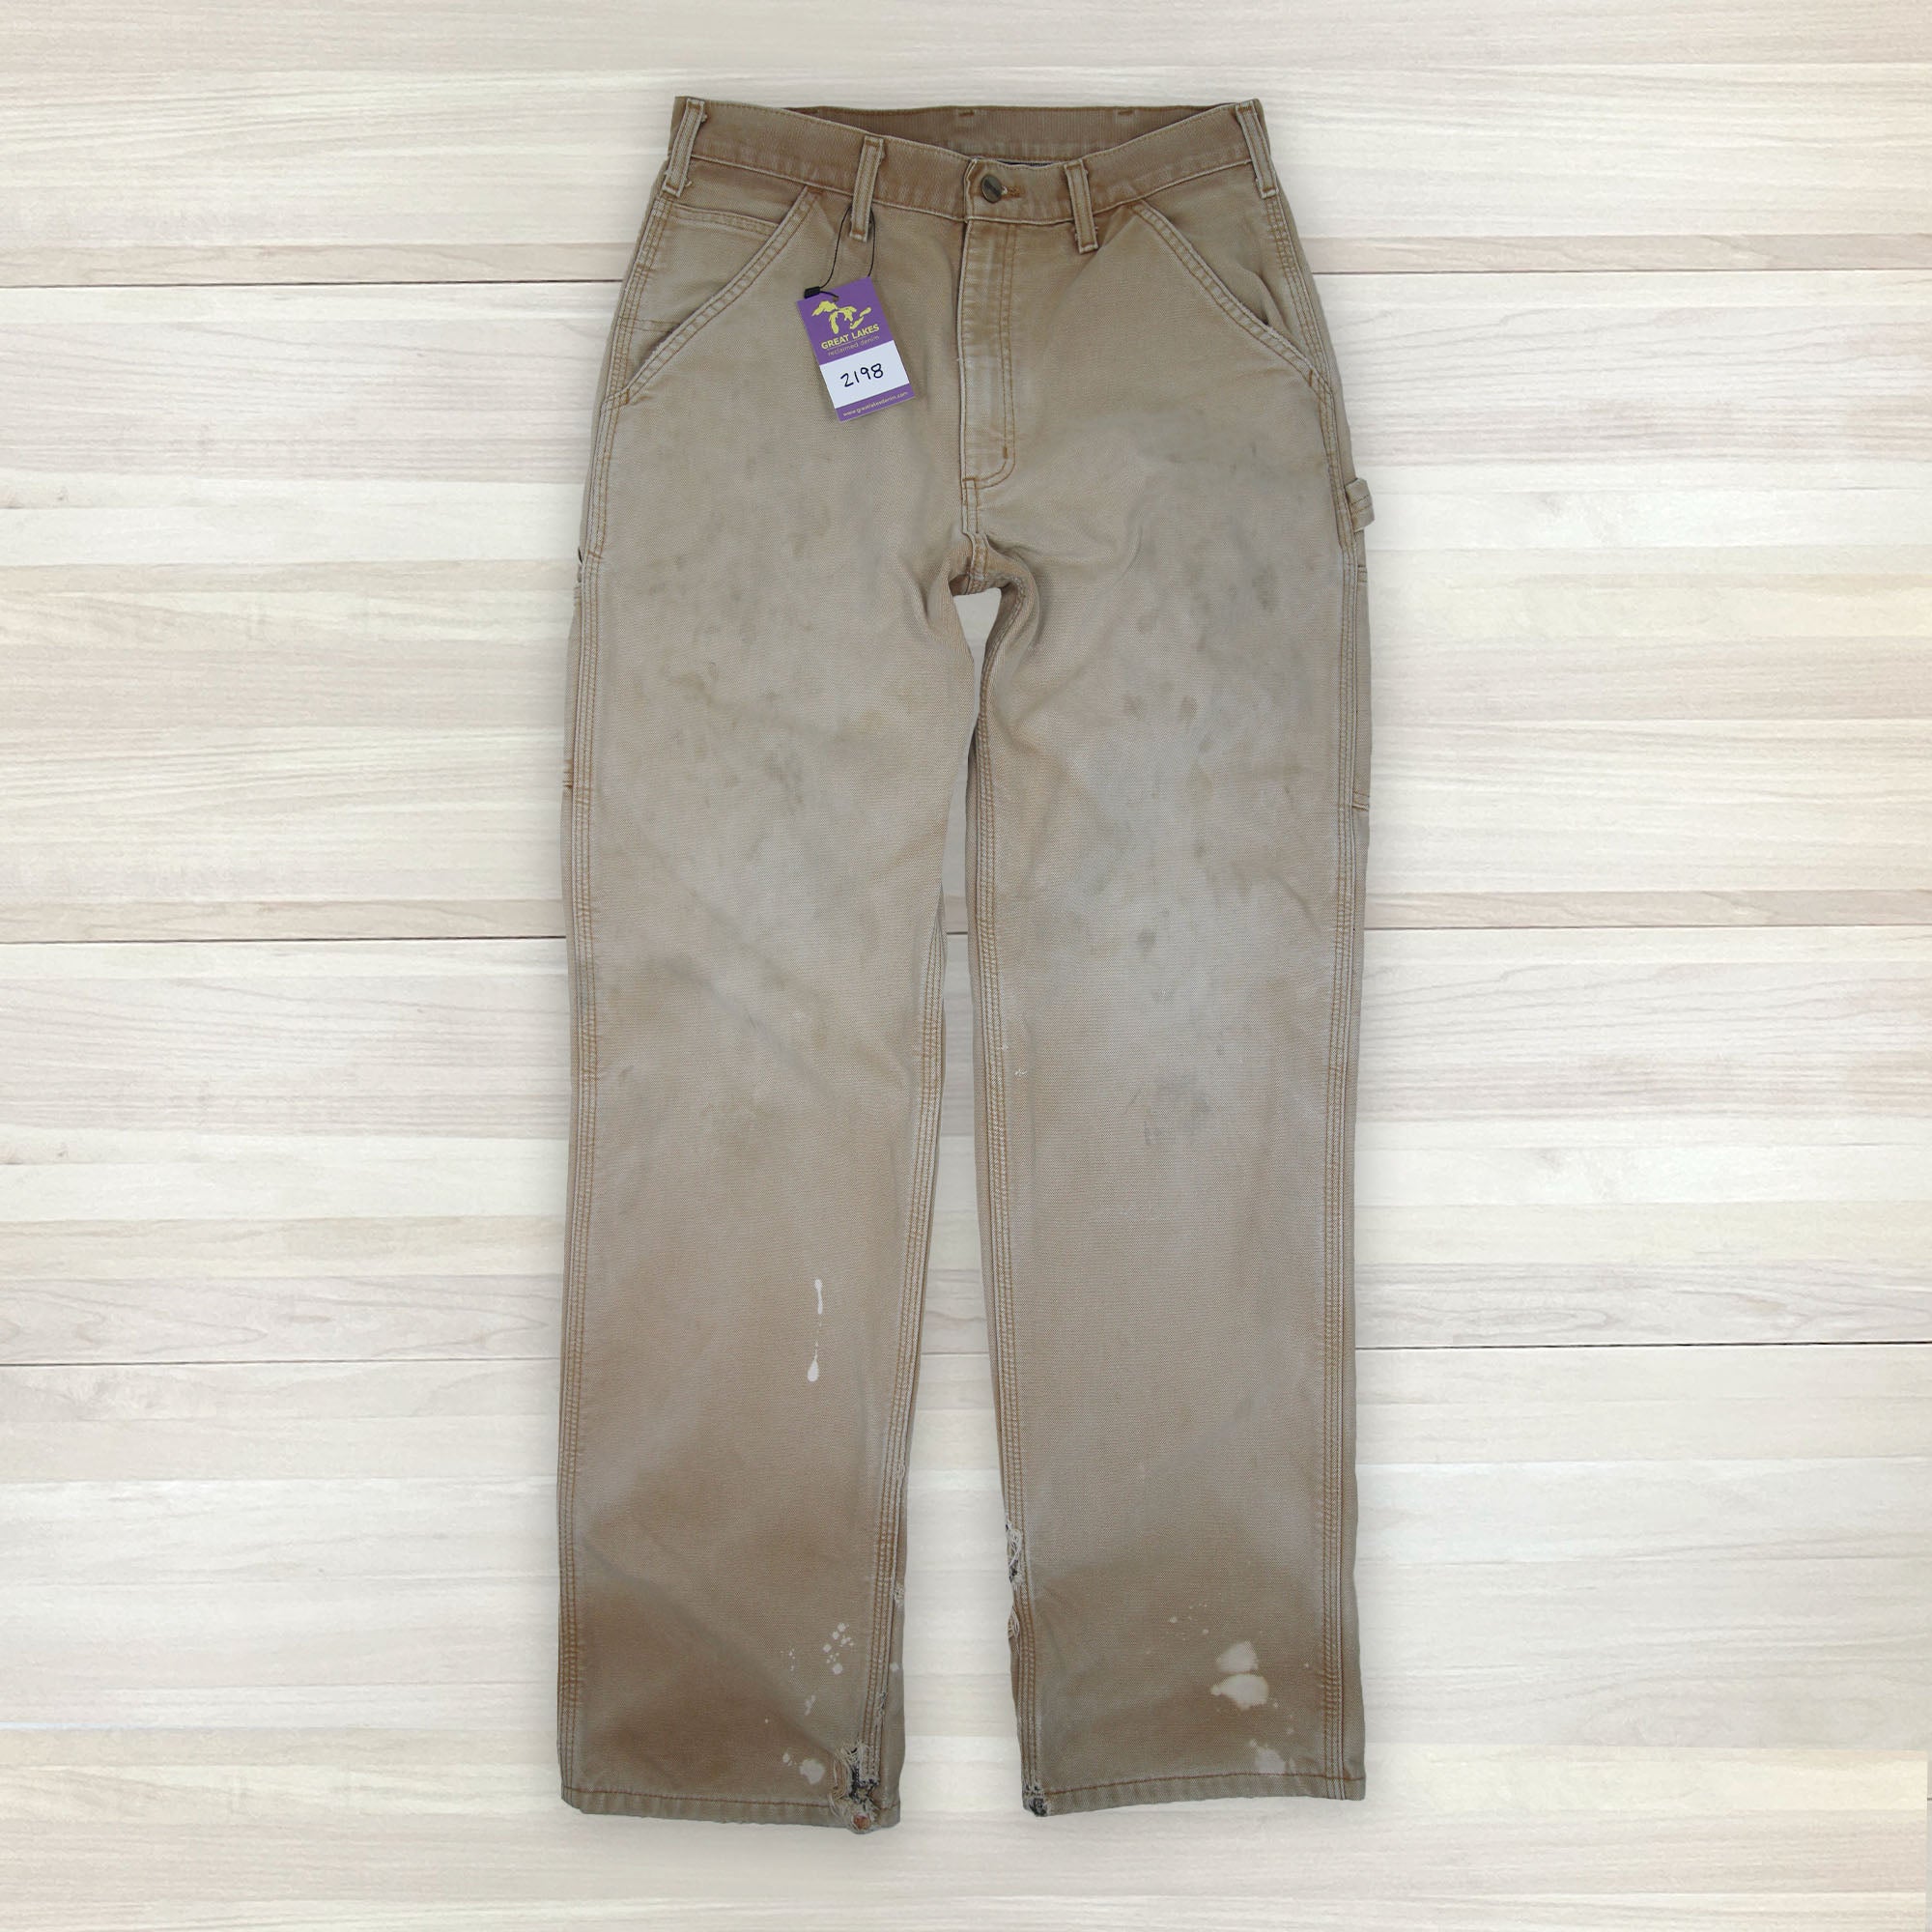 Men's Carhartt B111 BRN Flannel Lined Loose Fit Pants - Measures 30x33